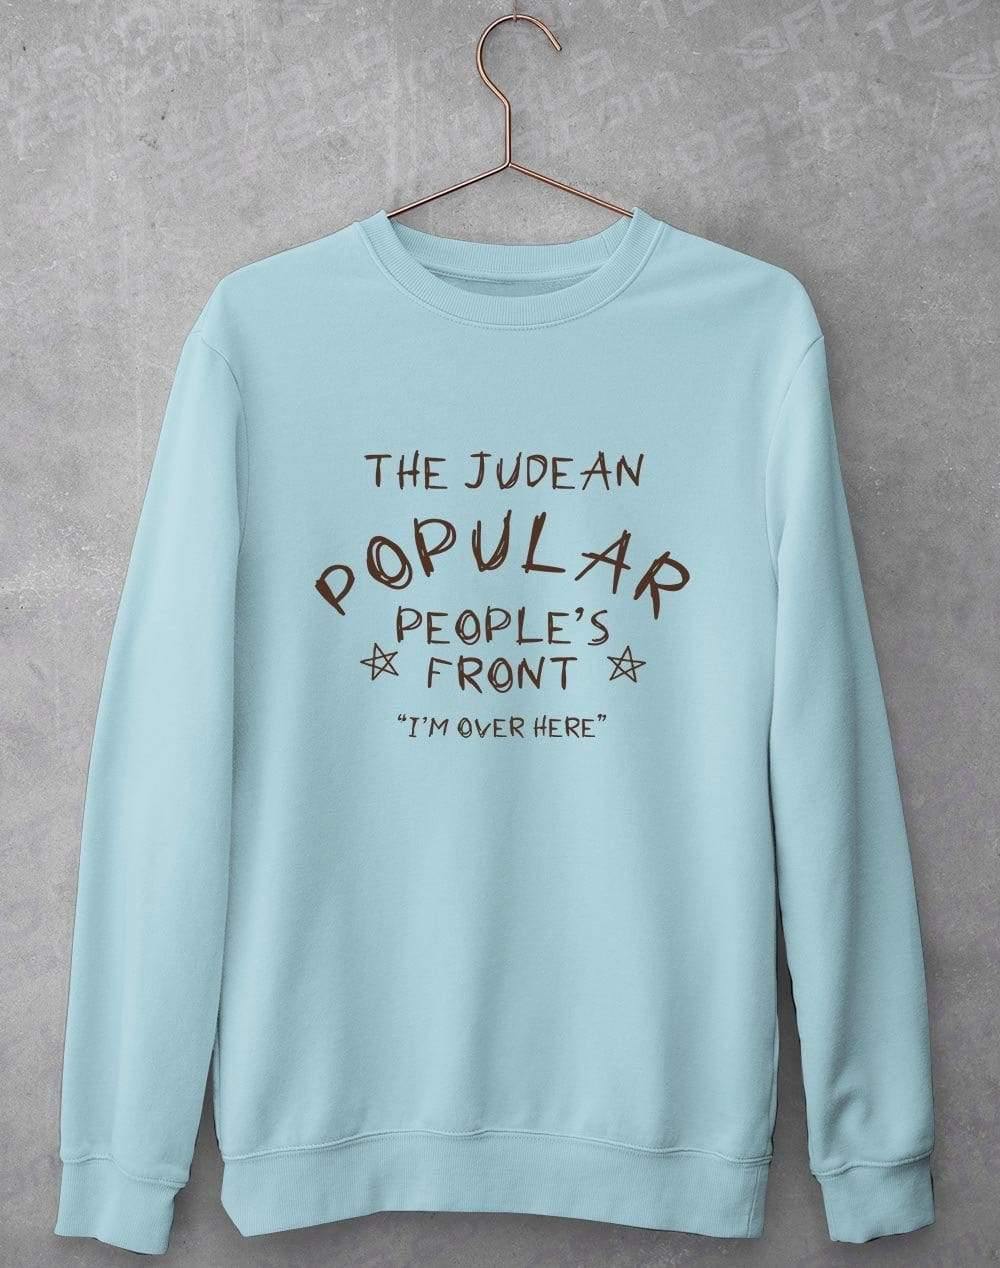 Judean Pupular Peoples Front Sweatshirt S / Light Blue  - Off World Tees